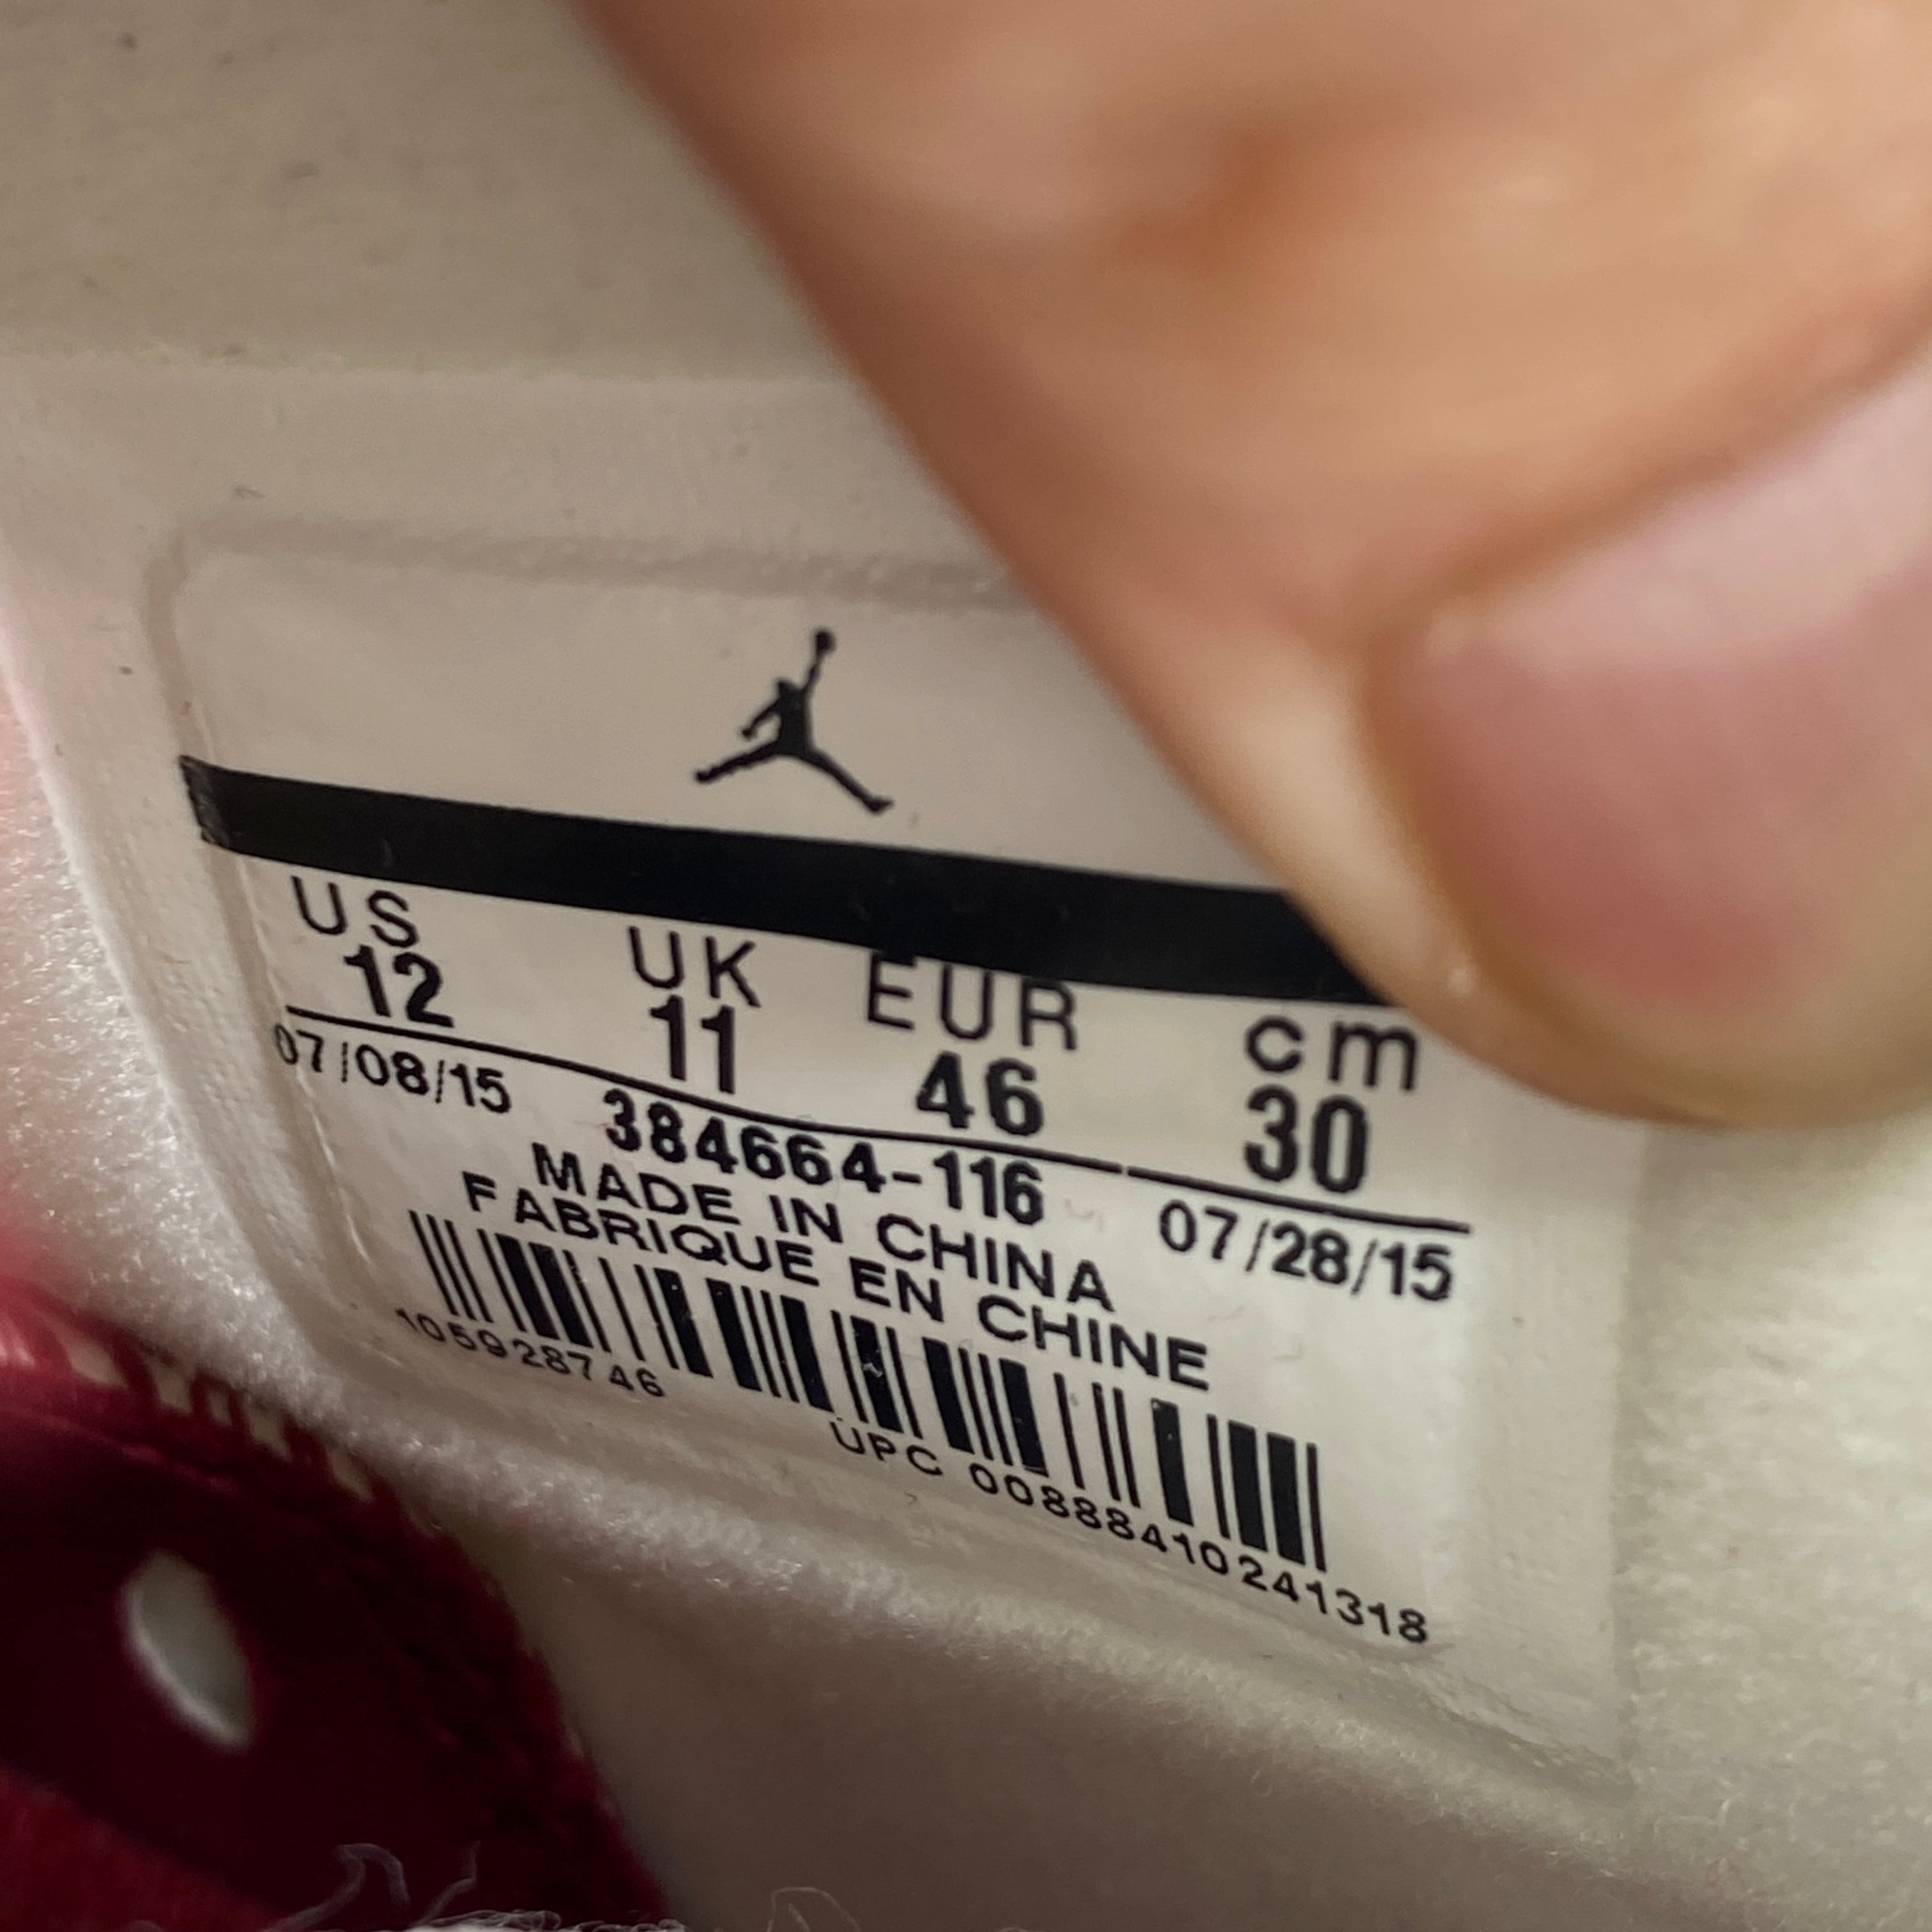 Air Jordan 6 Retro "Maroon" 2015 Used Size 12